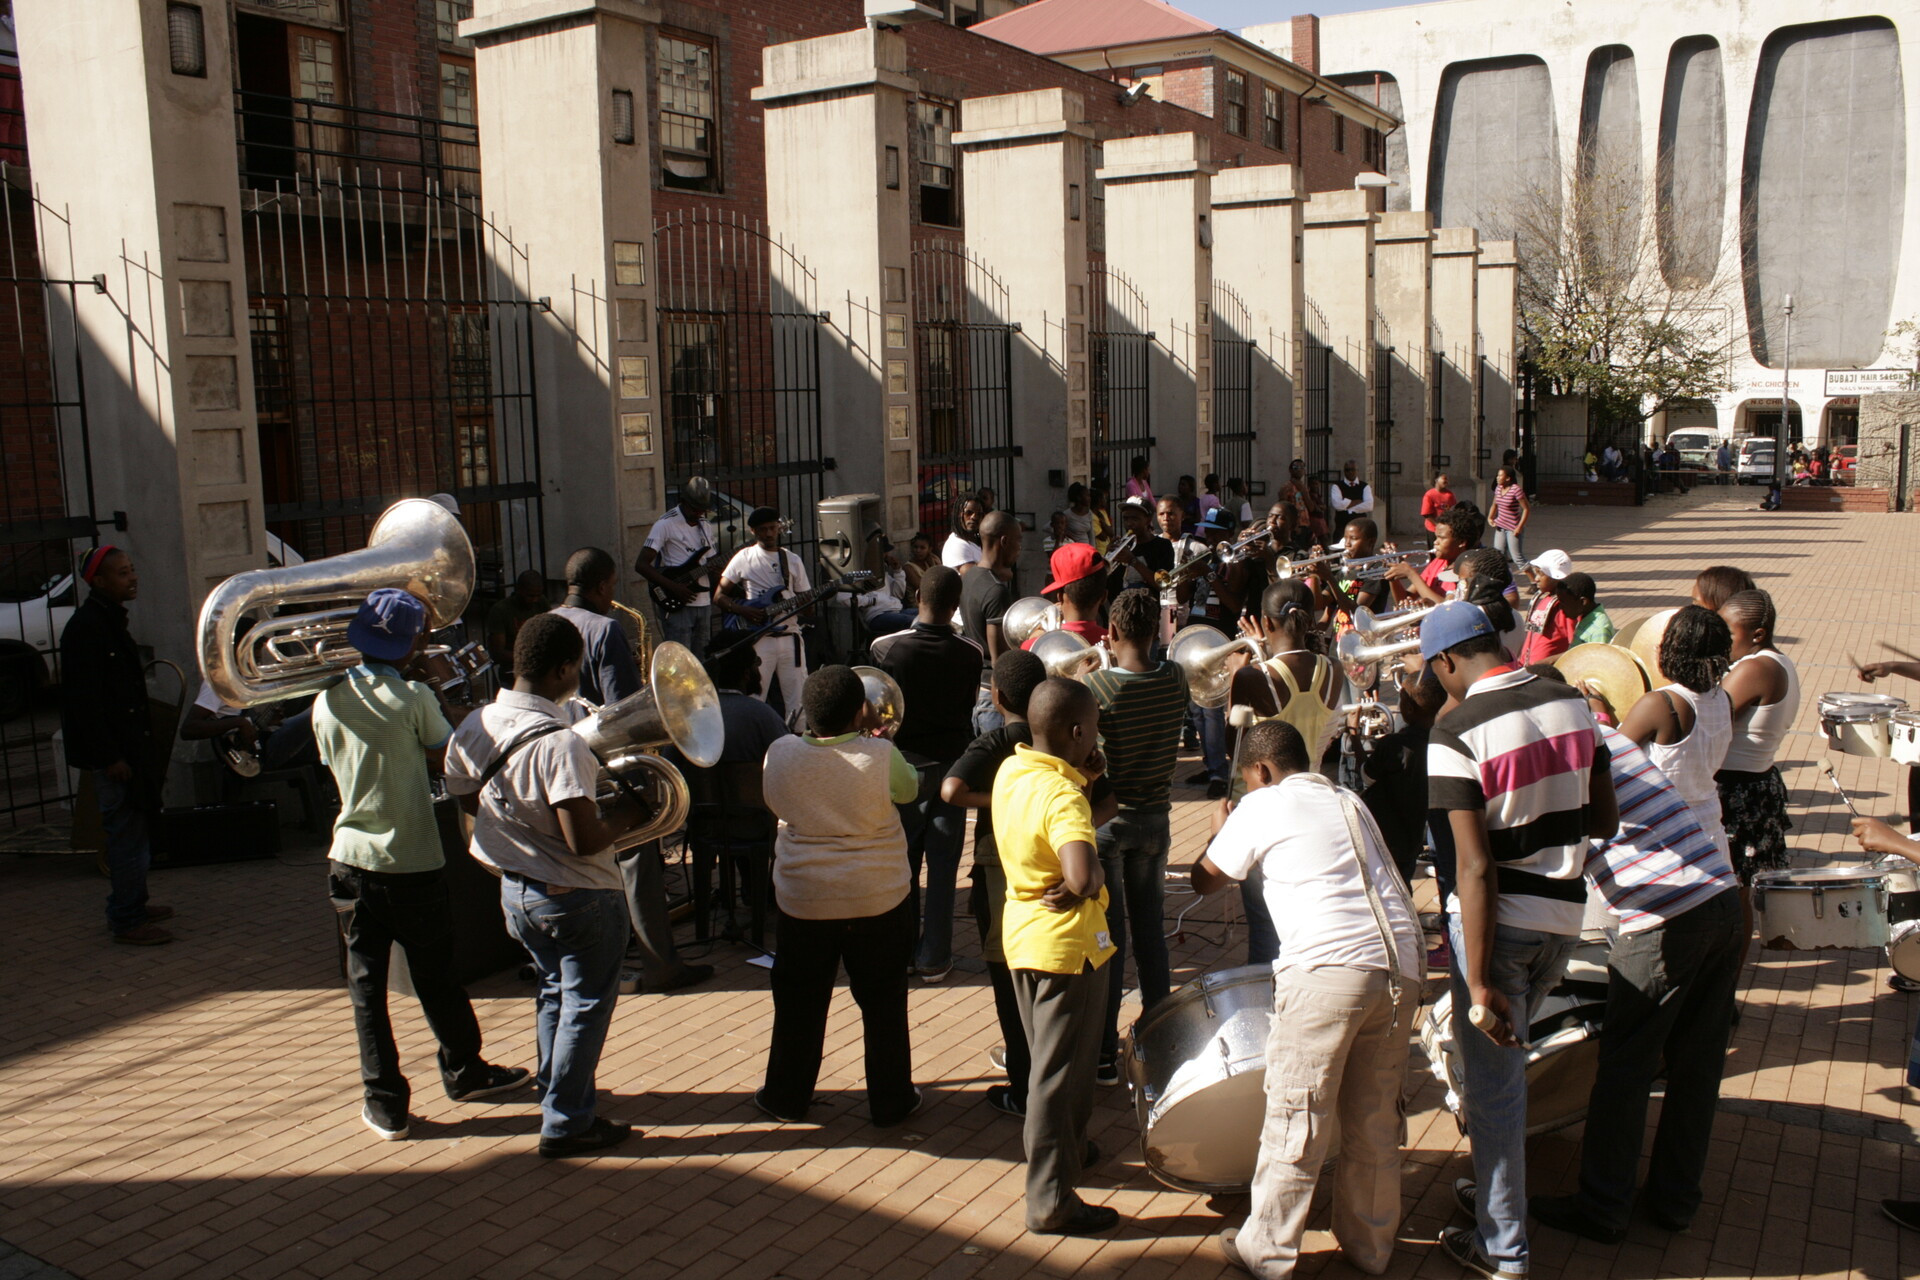 Keleketla! Library, After School Programme, Drill Hall, Johannesburg, 2011.